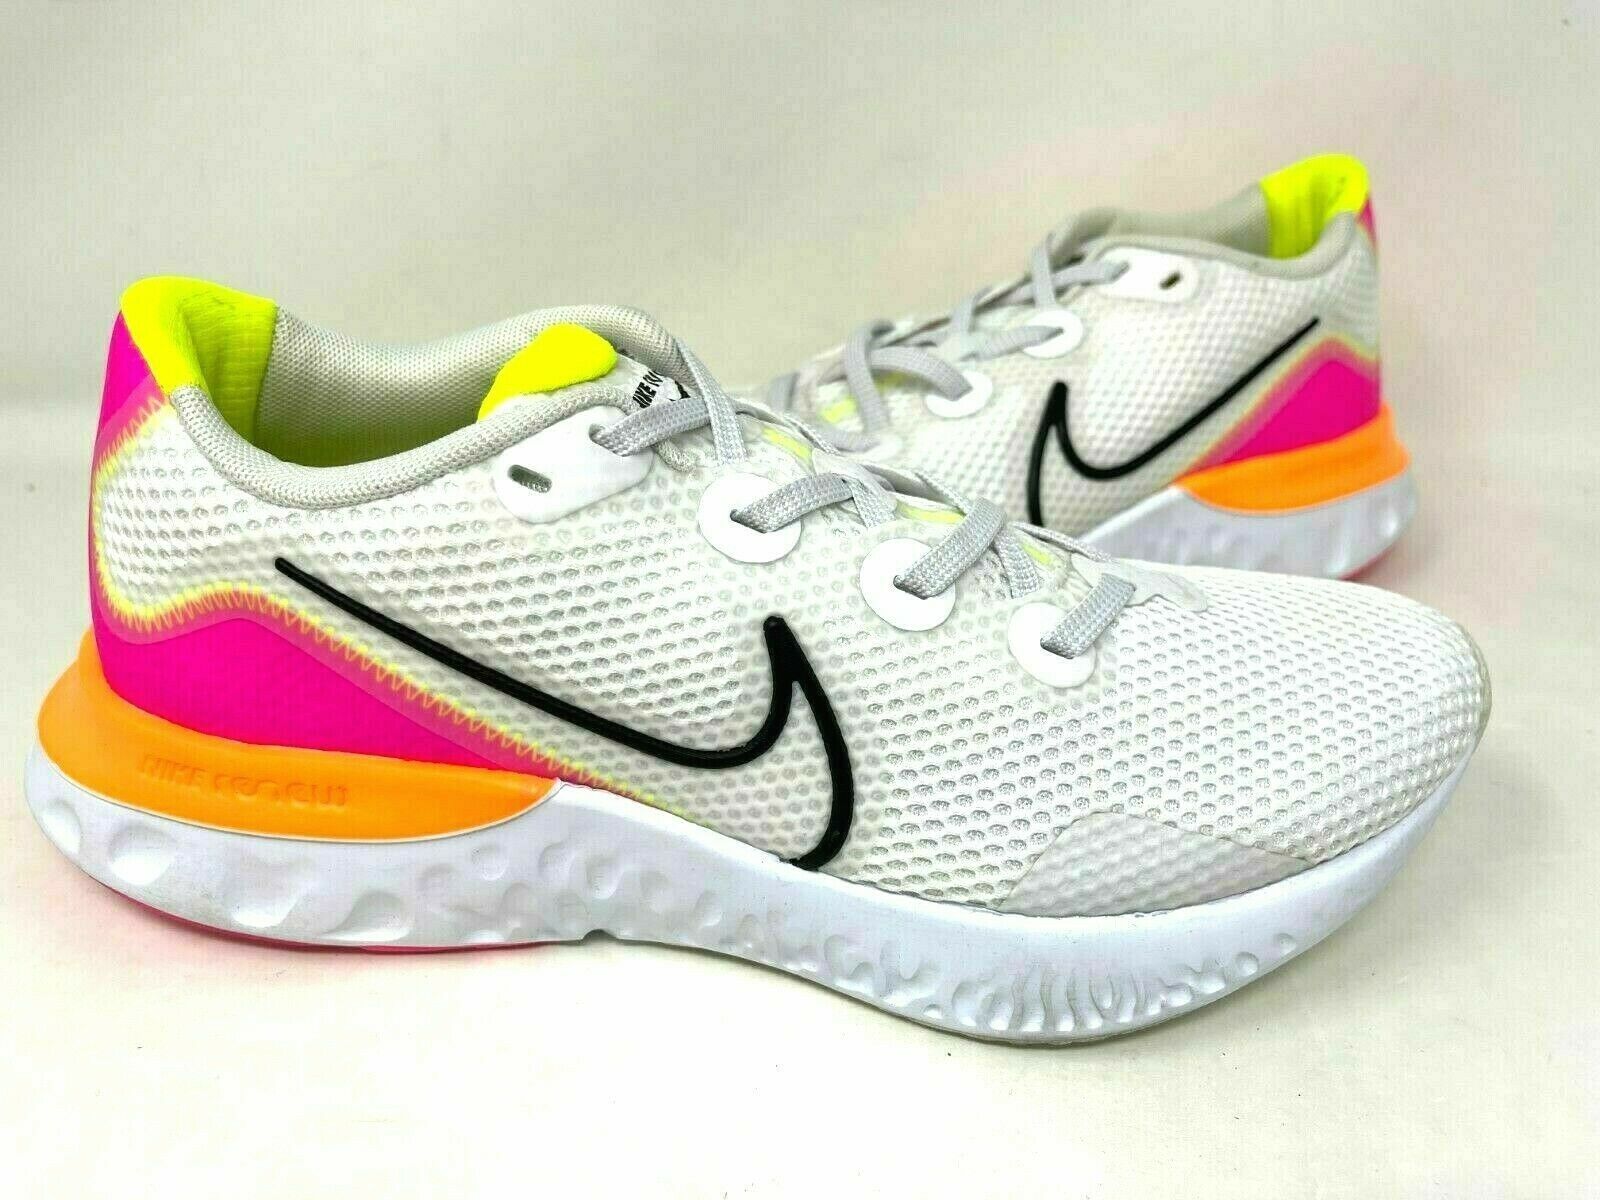 Nike Women's Renew Run Running Shoes Lace Up White/Neon Multi #CK636 Size:6 146H